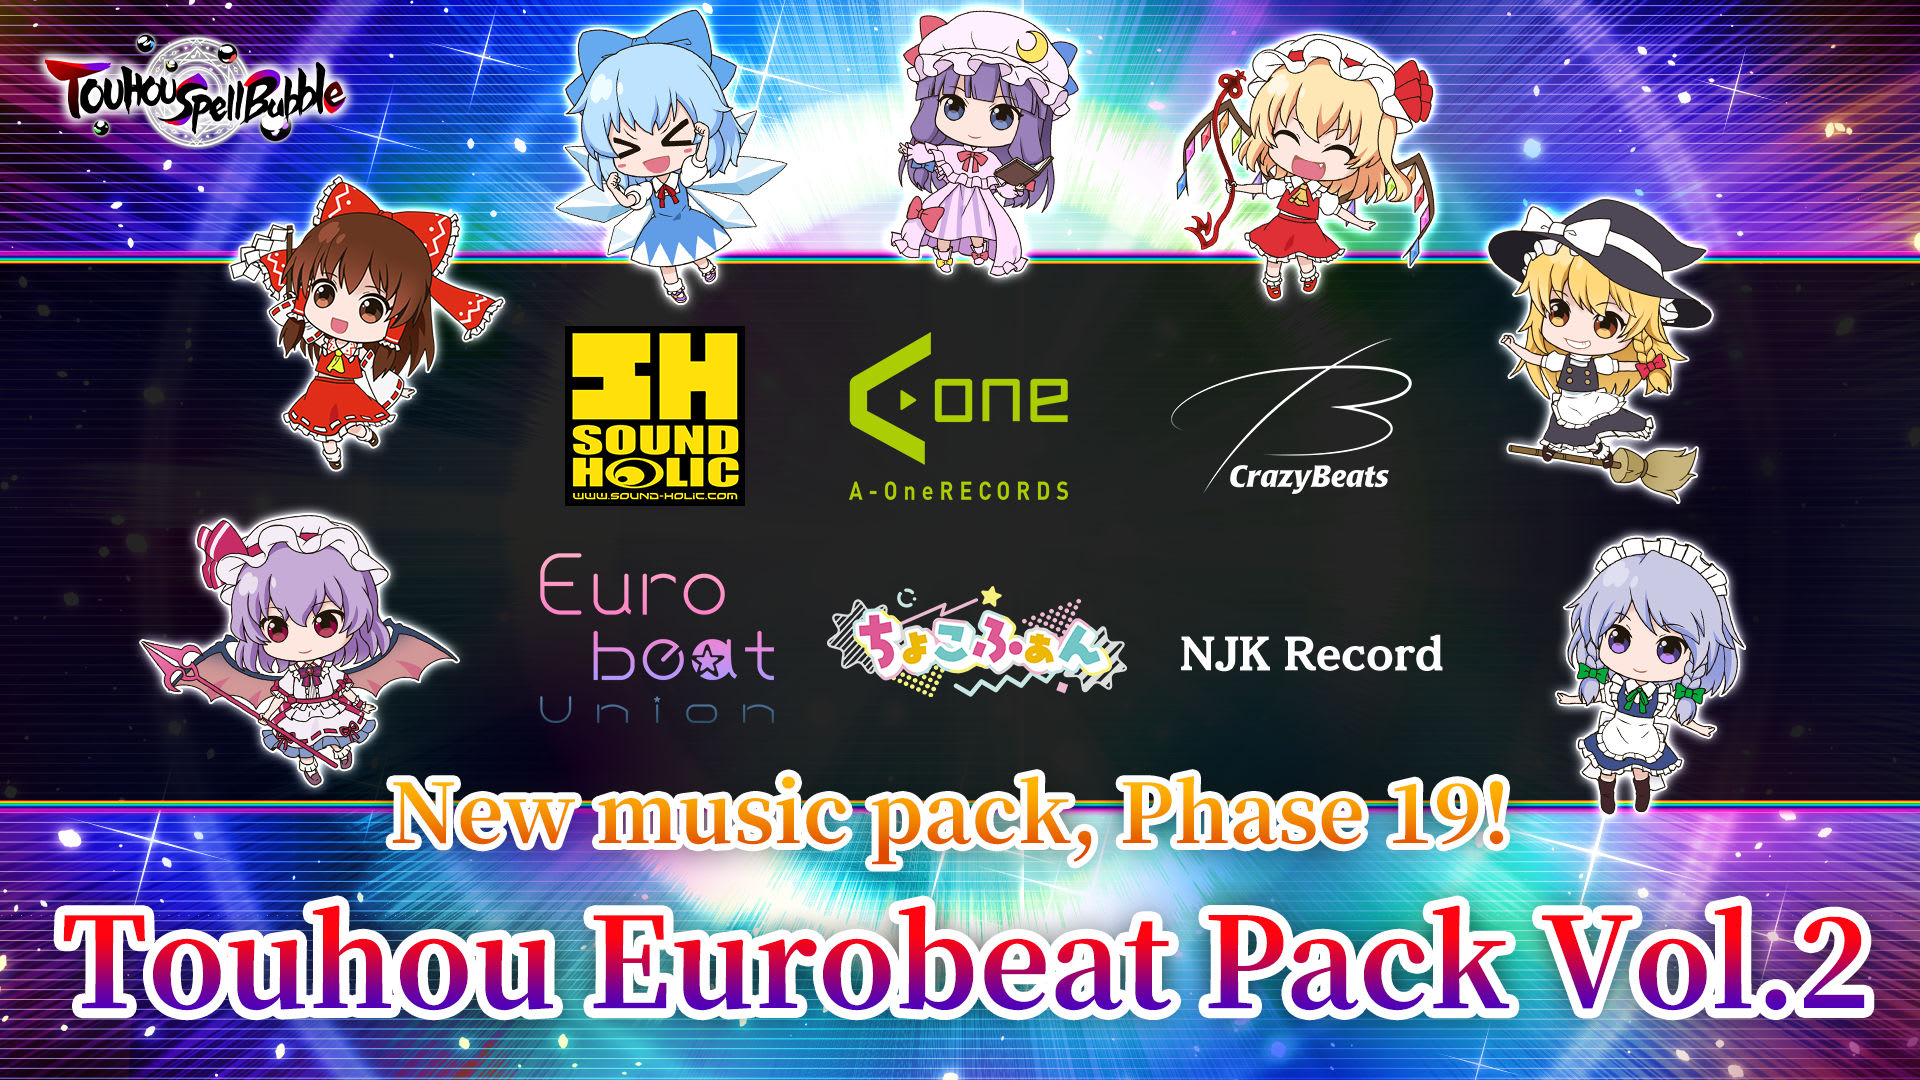 Touhou Eurobeat Pack Vol.2